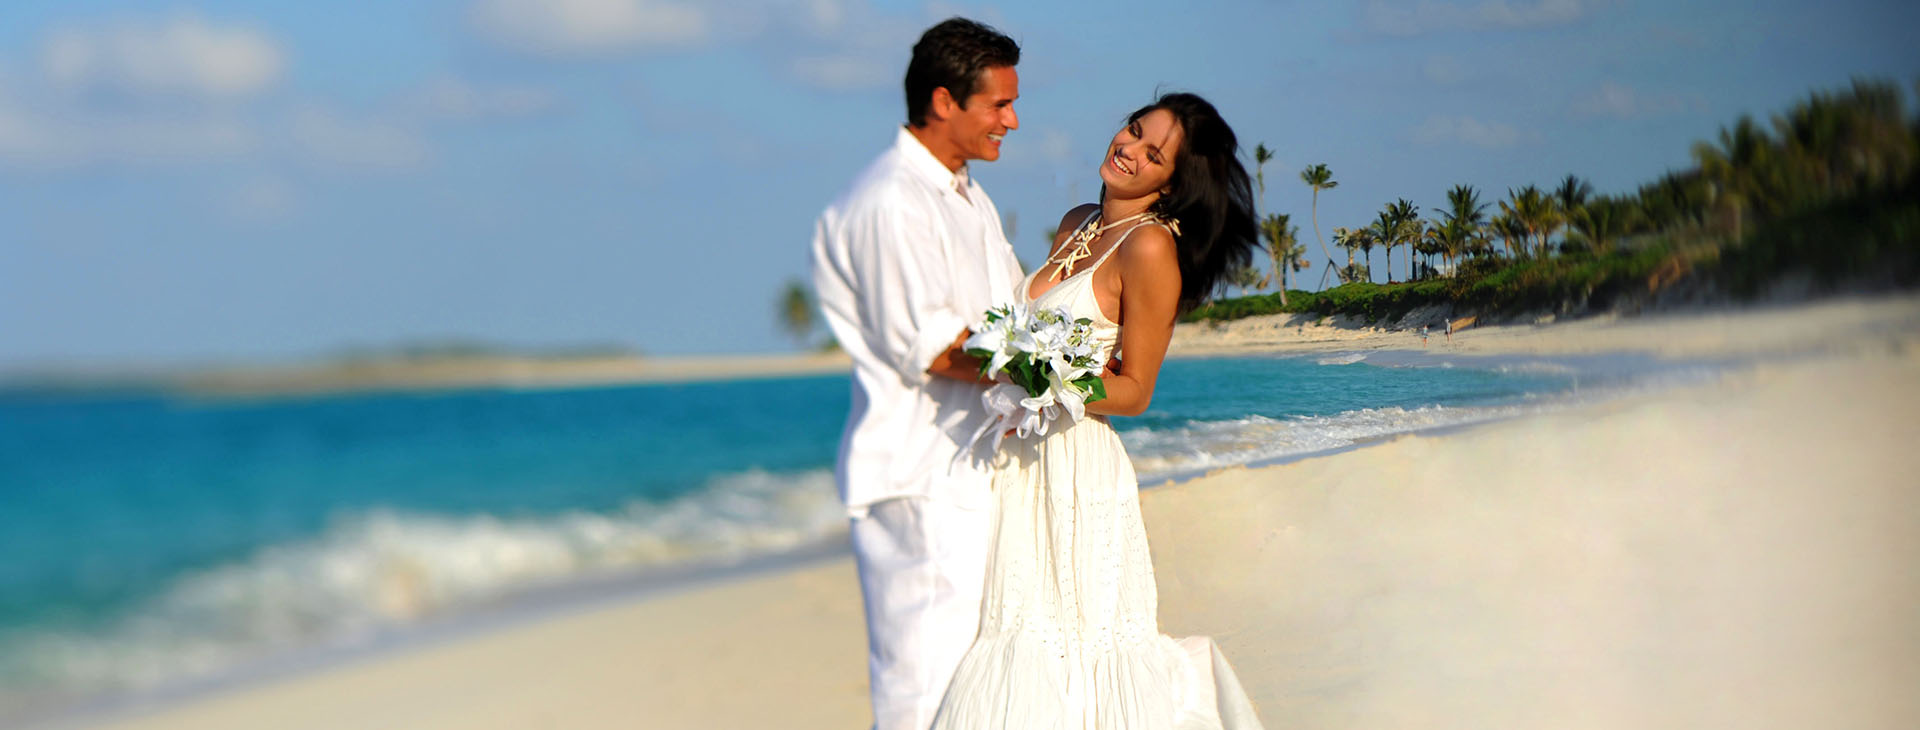 Weddings & Honeymoons in Greece & Greek Islands